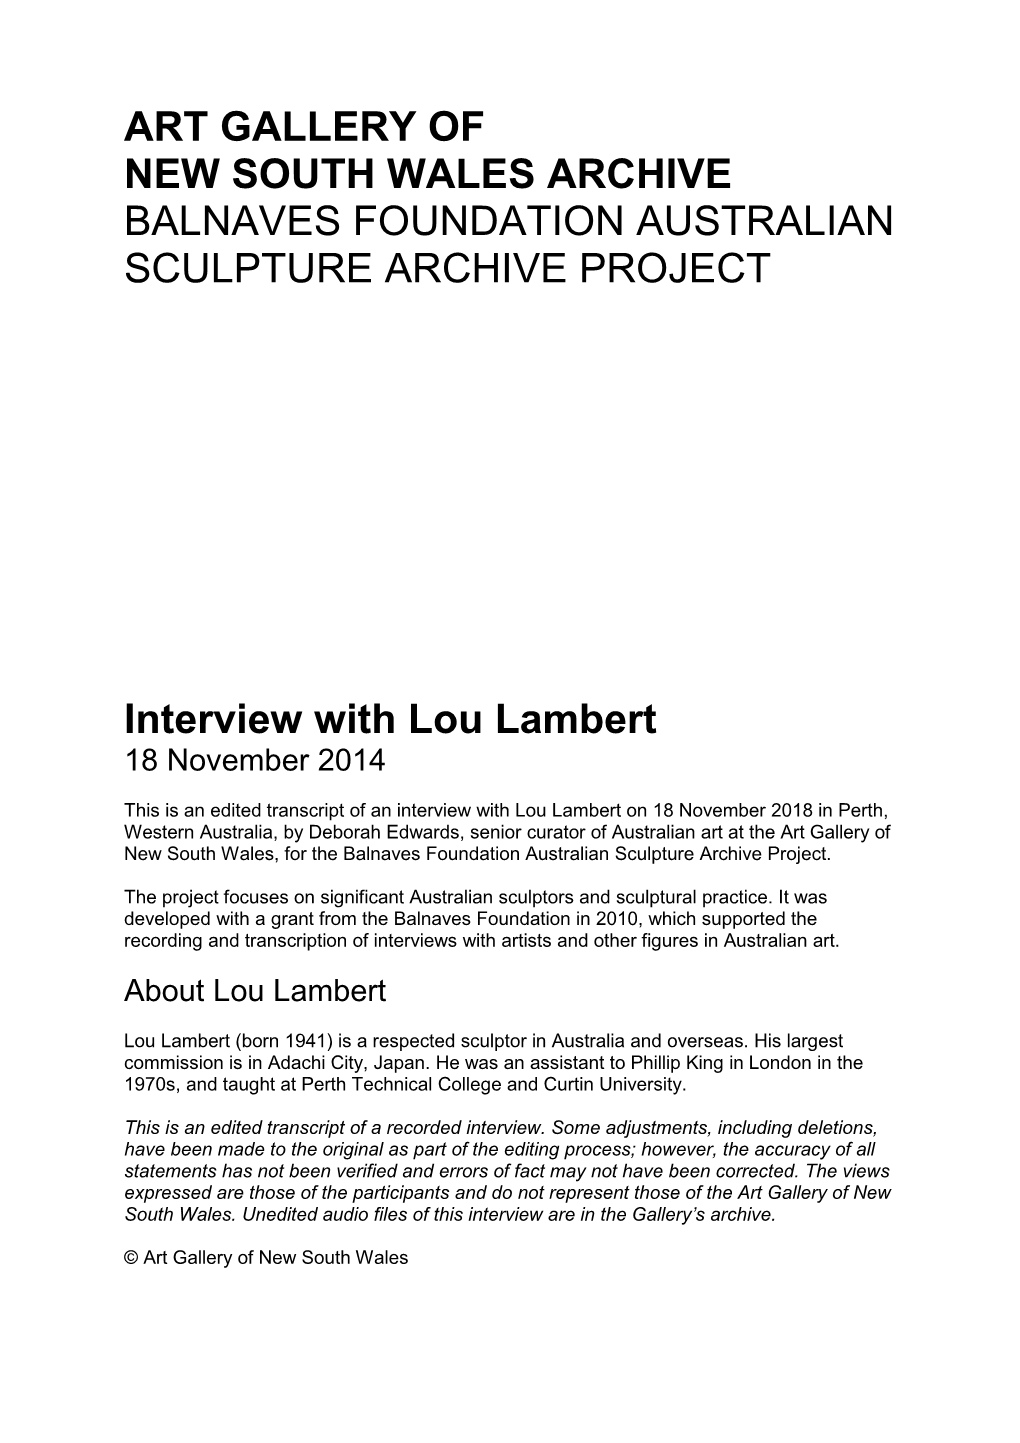 Interview with Lou Lambert 18 November 2014